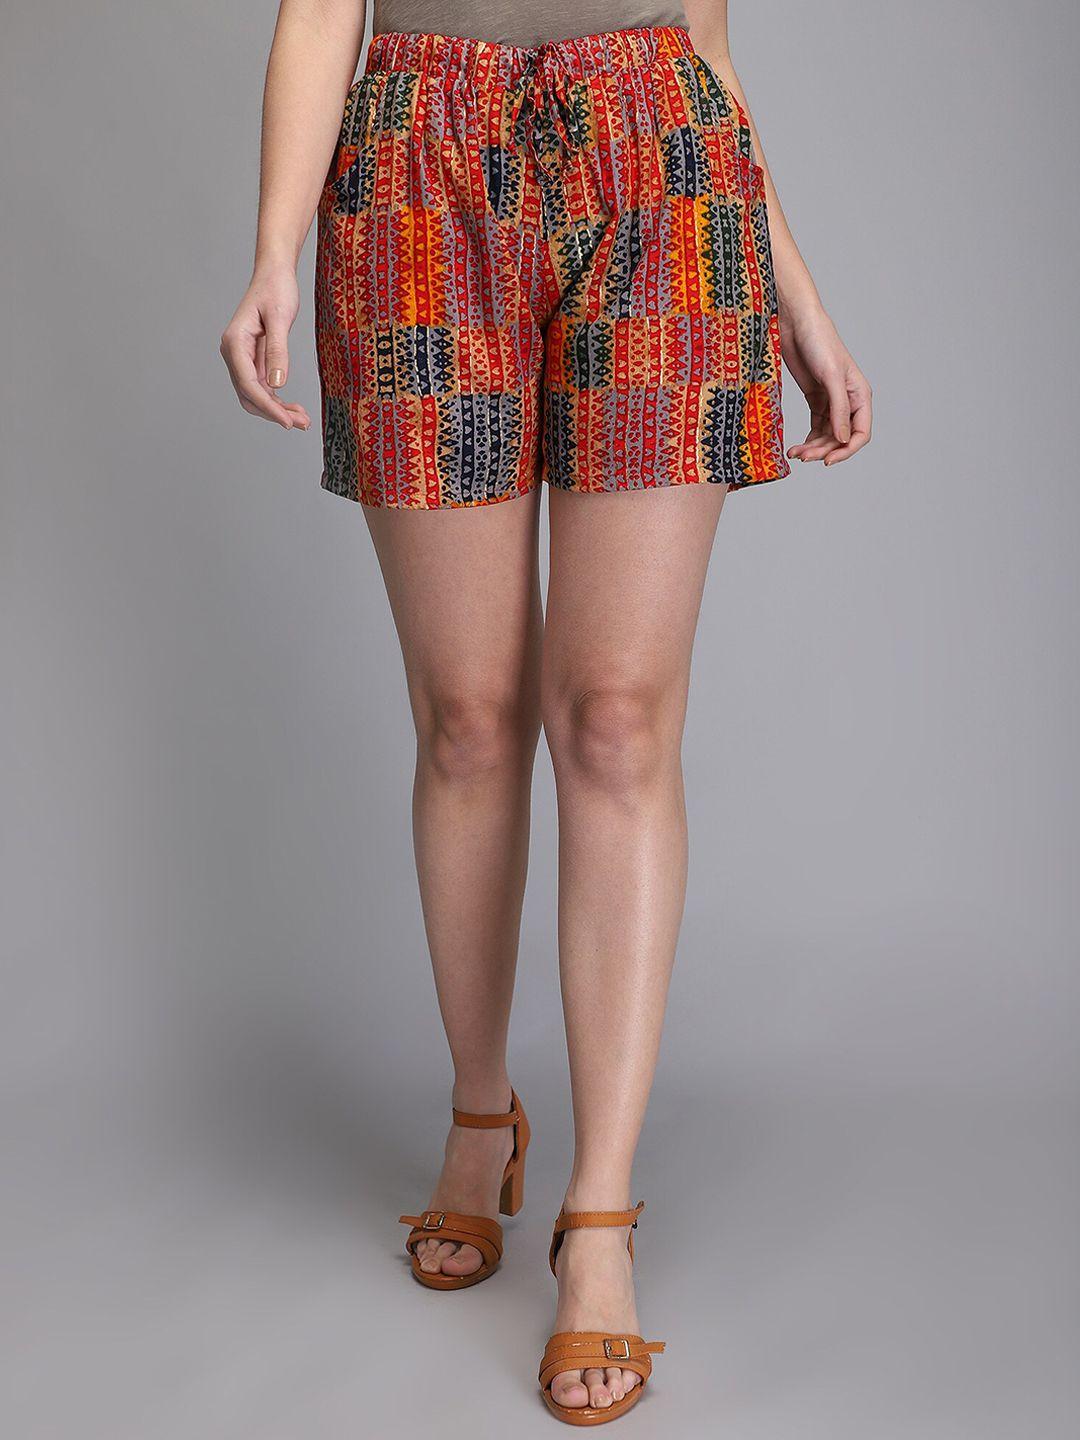 Aditi Wasan Women Geometric Printed Mid-Rise Shorts